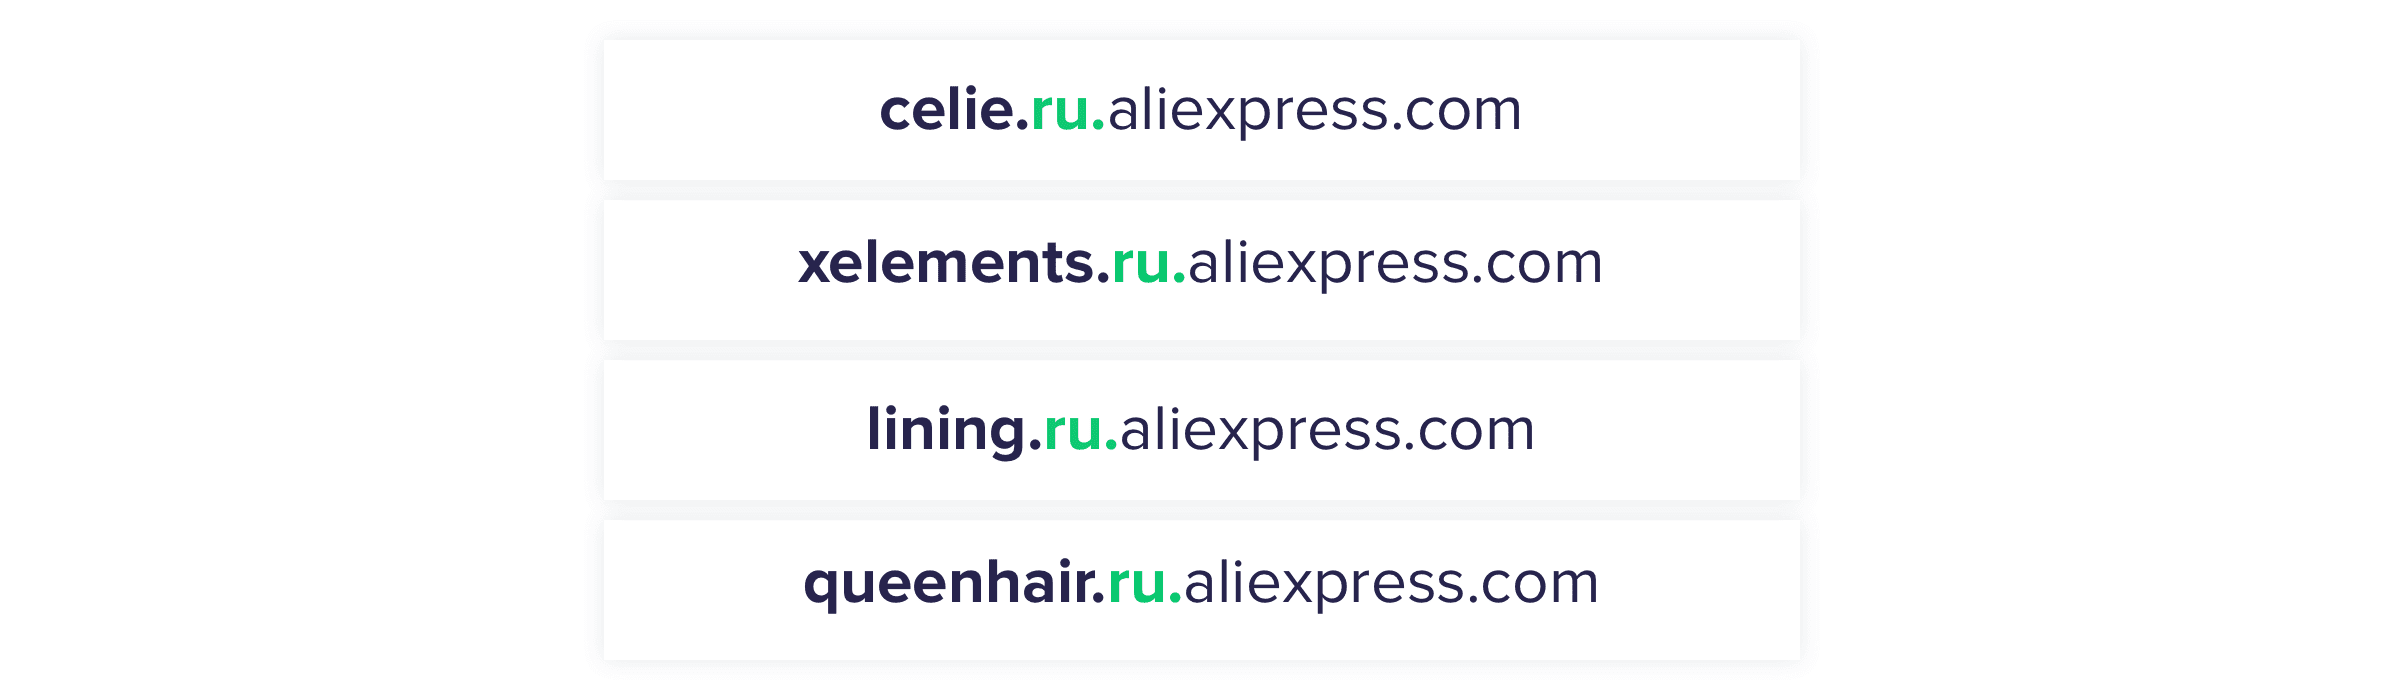 AliExpress النطاقات الفرعية الإقليمية والفئة